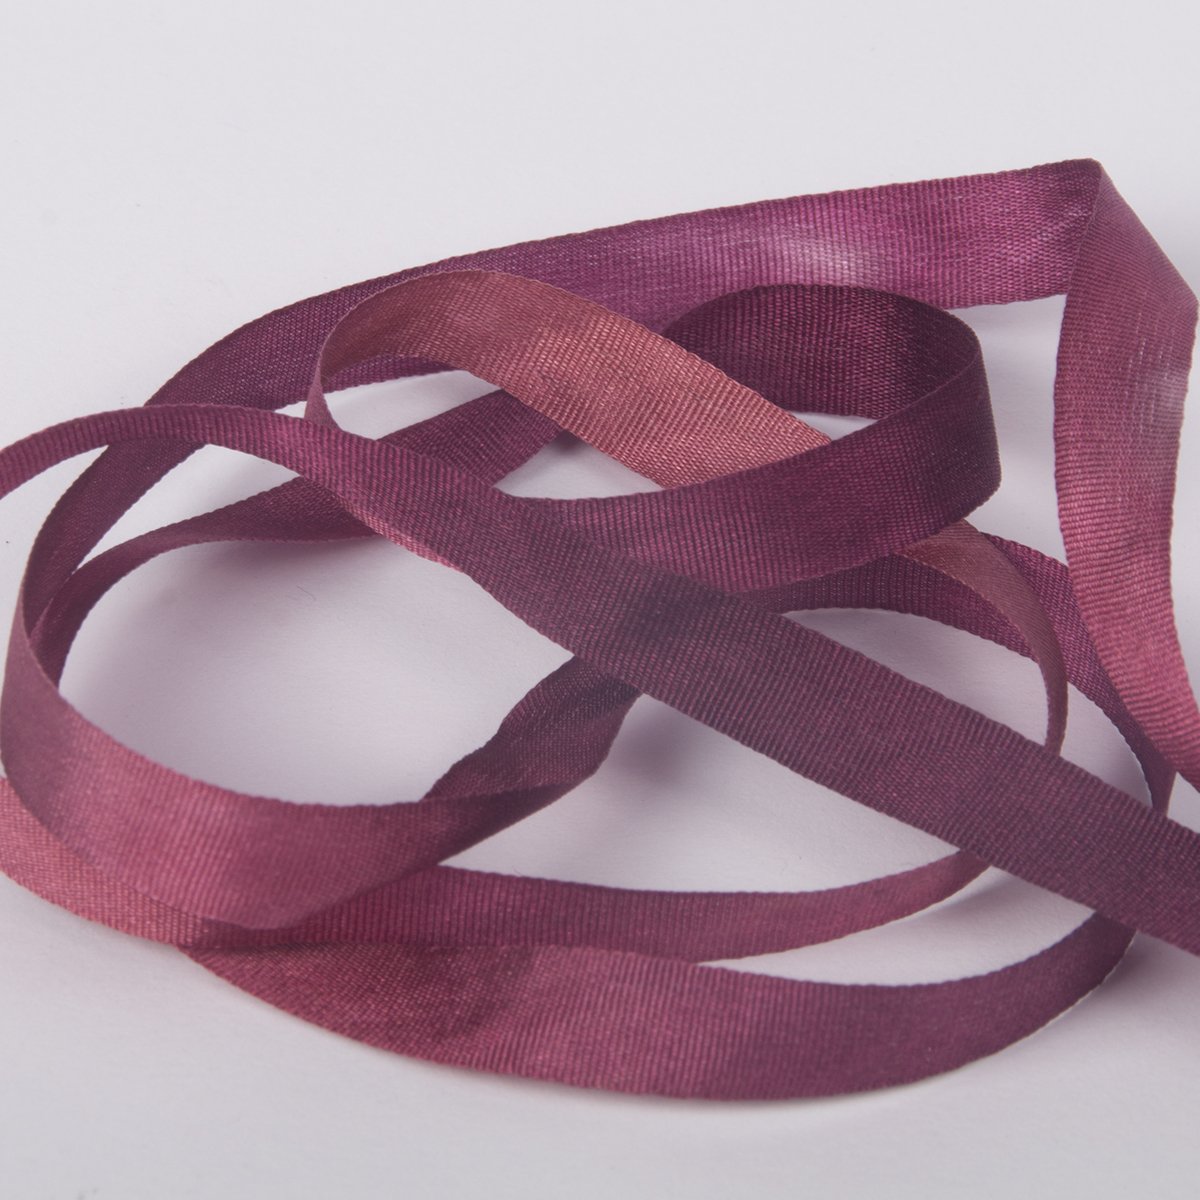 Leaves ribbon setGibb & Hiney, hand-dyed silk ribbon, 5 colors, 2